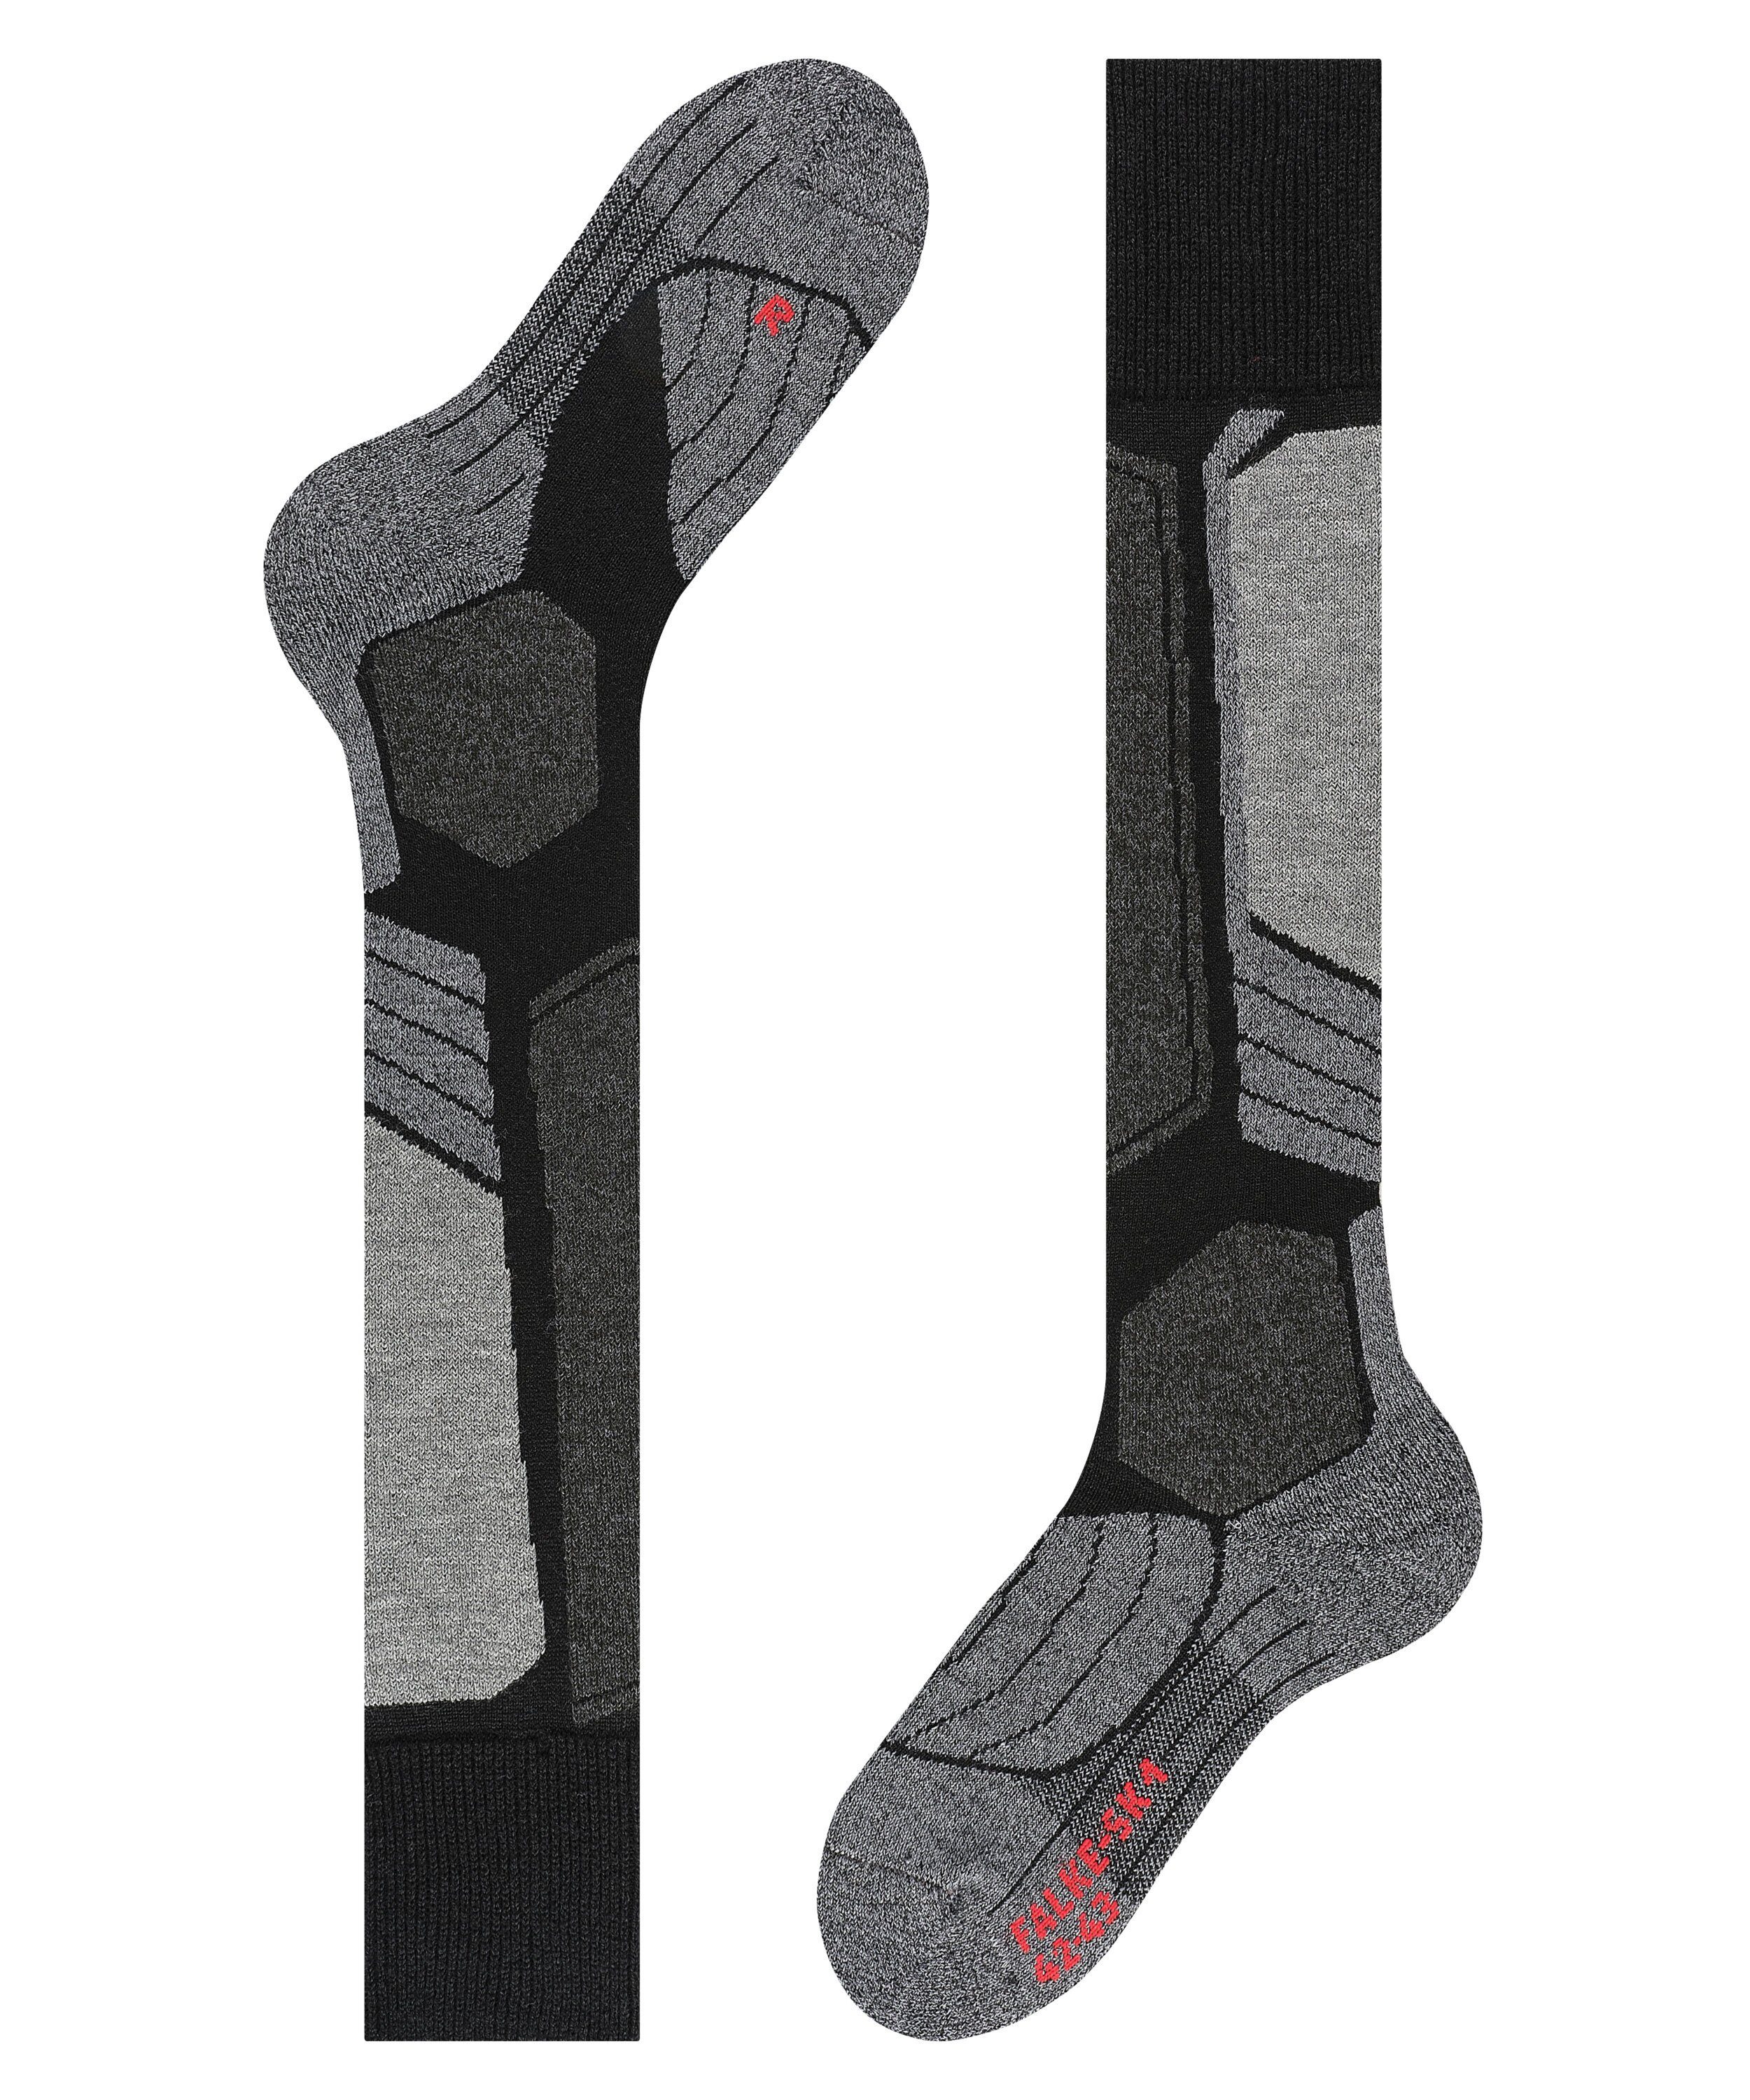 maximale (1-Paar) Polsterung FALKE black-mix hohen Comfort (3010) für Komfort SK1 Skisocken